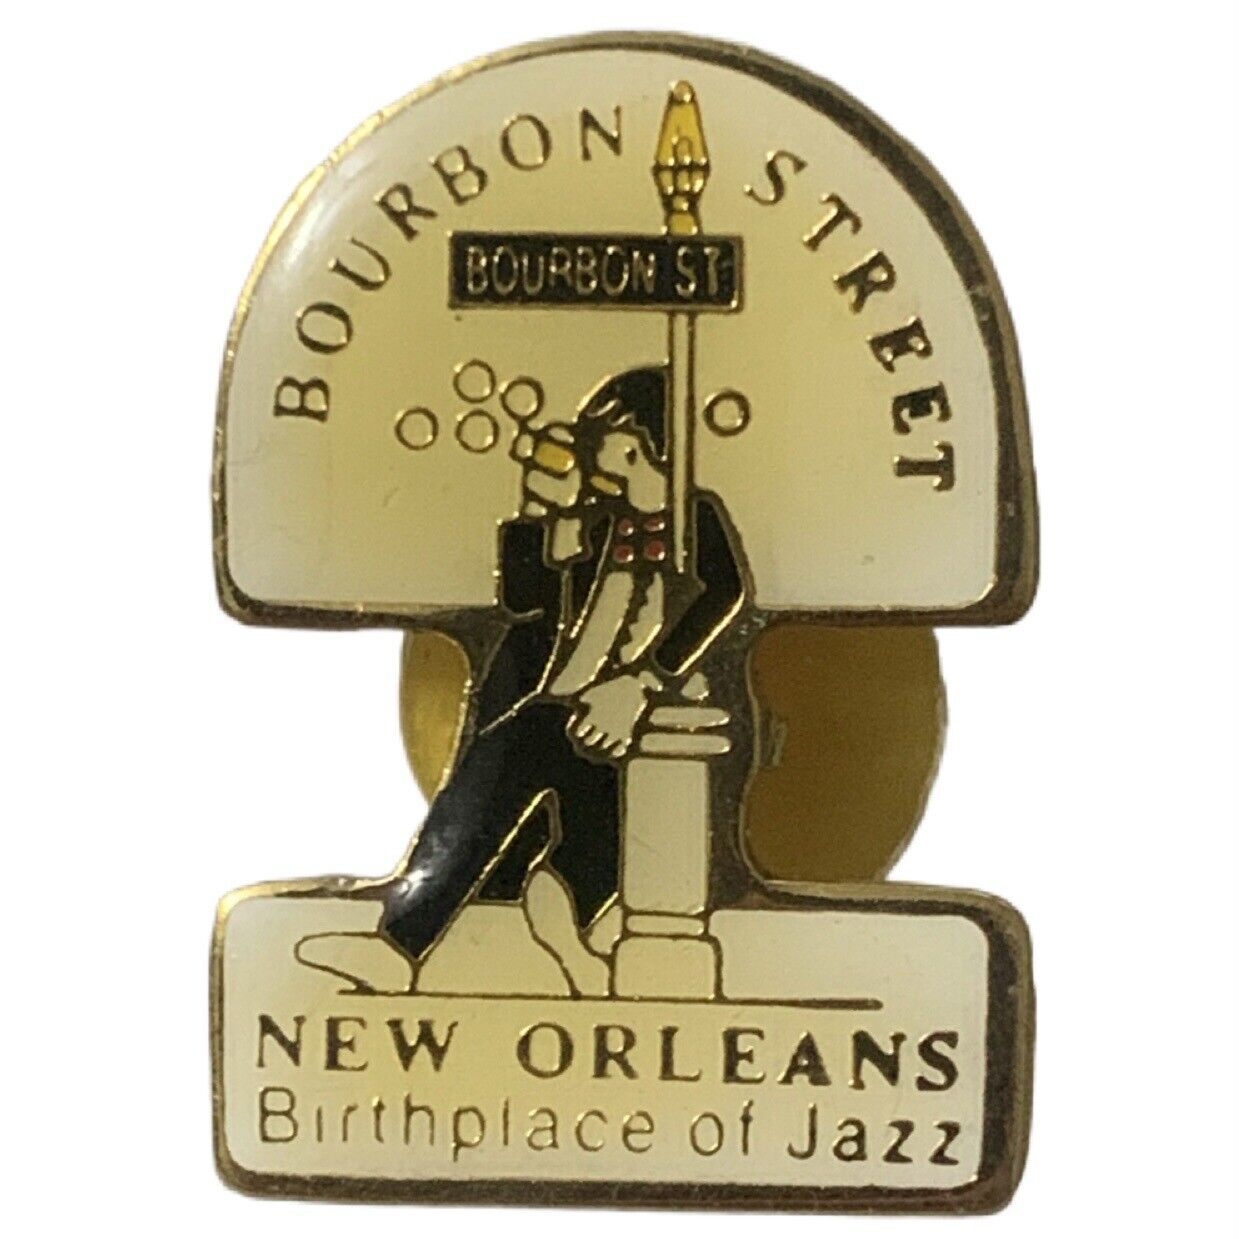 Vintage New Orleans Bourbon Street Birthplace of Jazz Travel Souvenir Pin